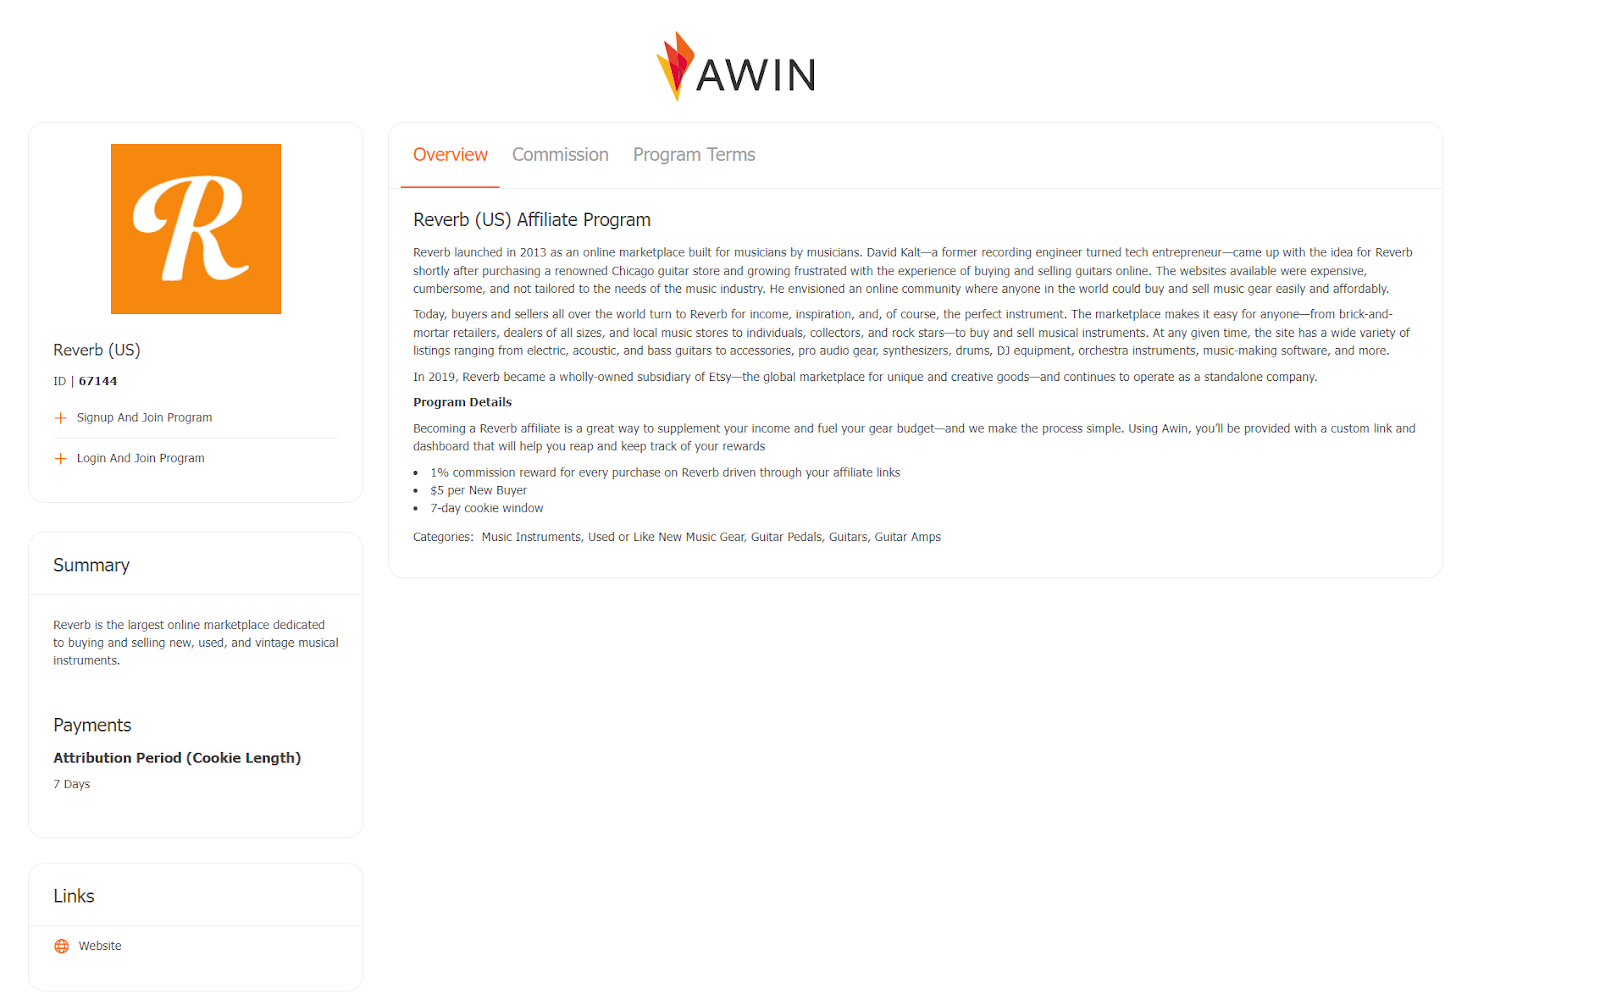 Reverb affiliate program on Awin